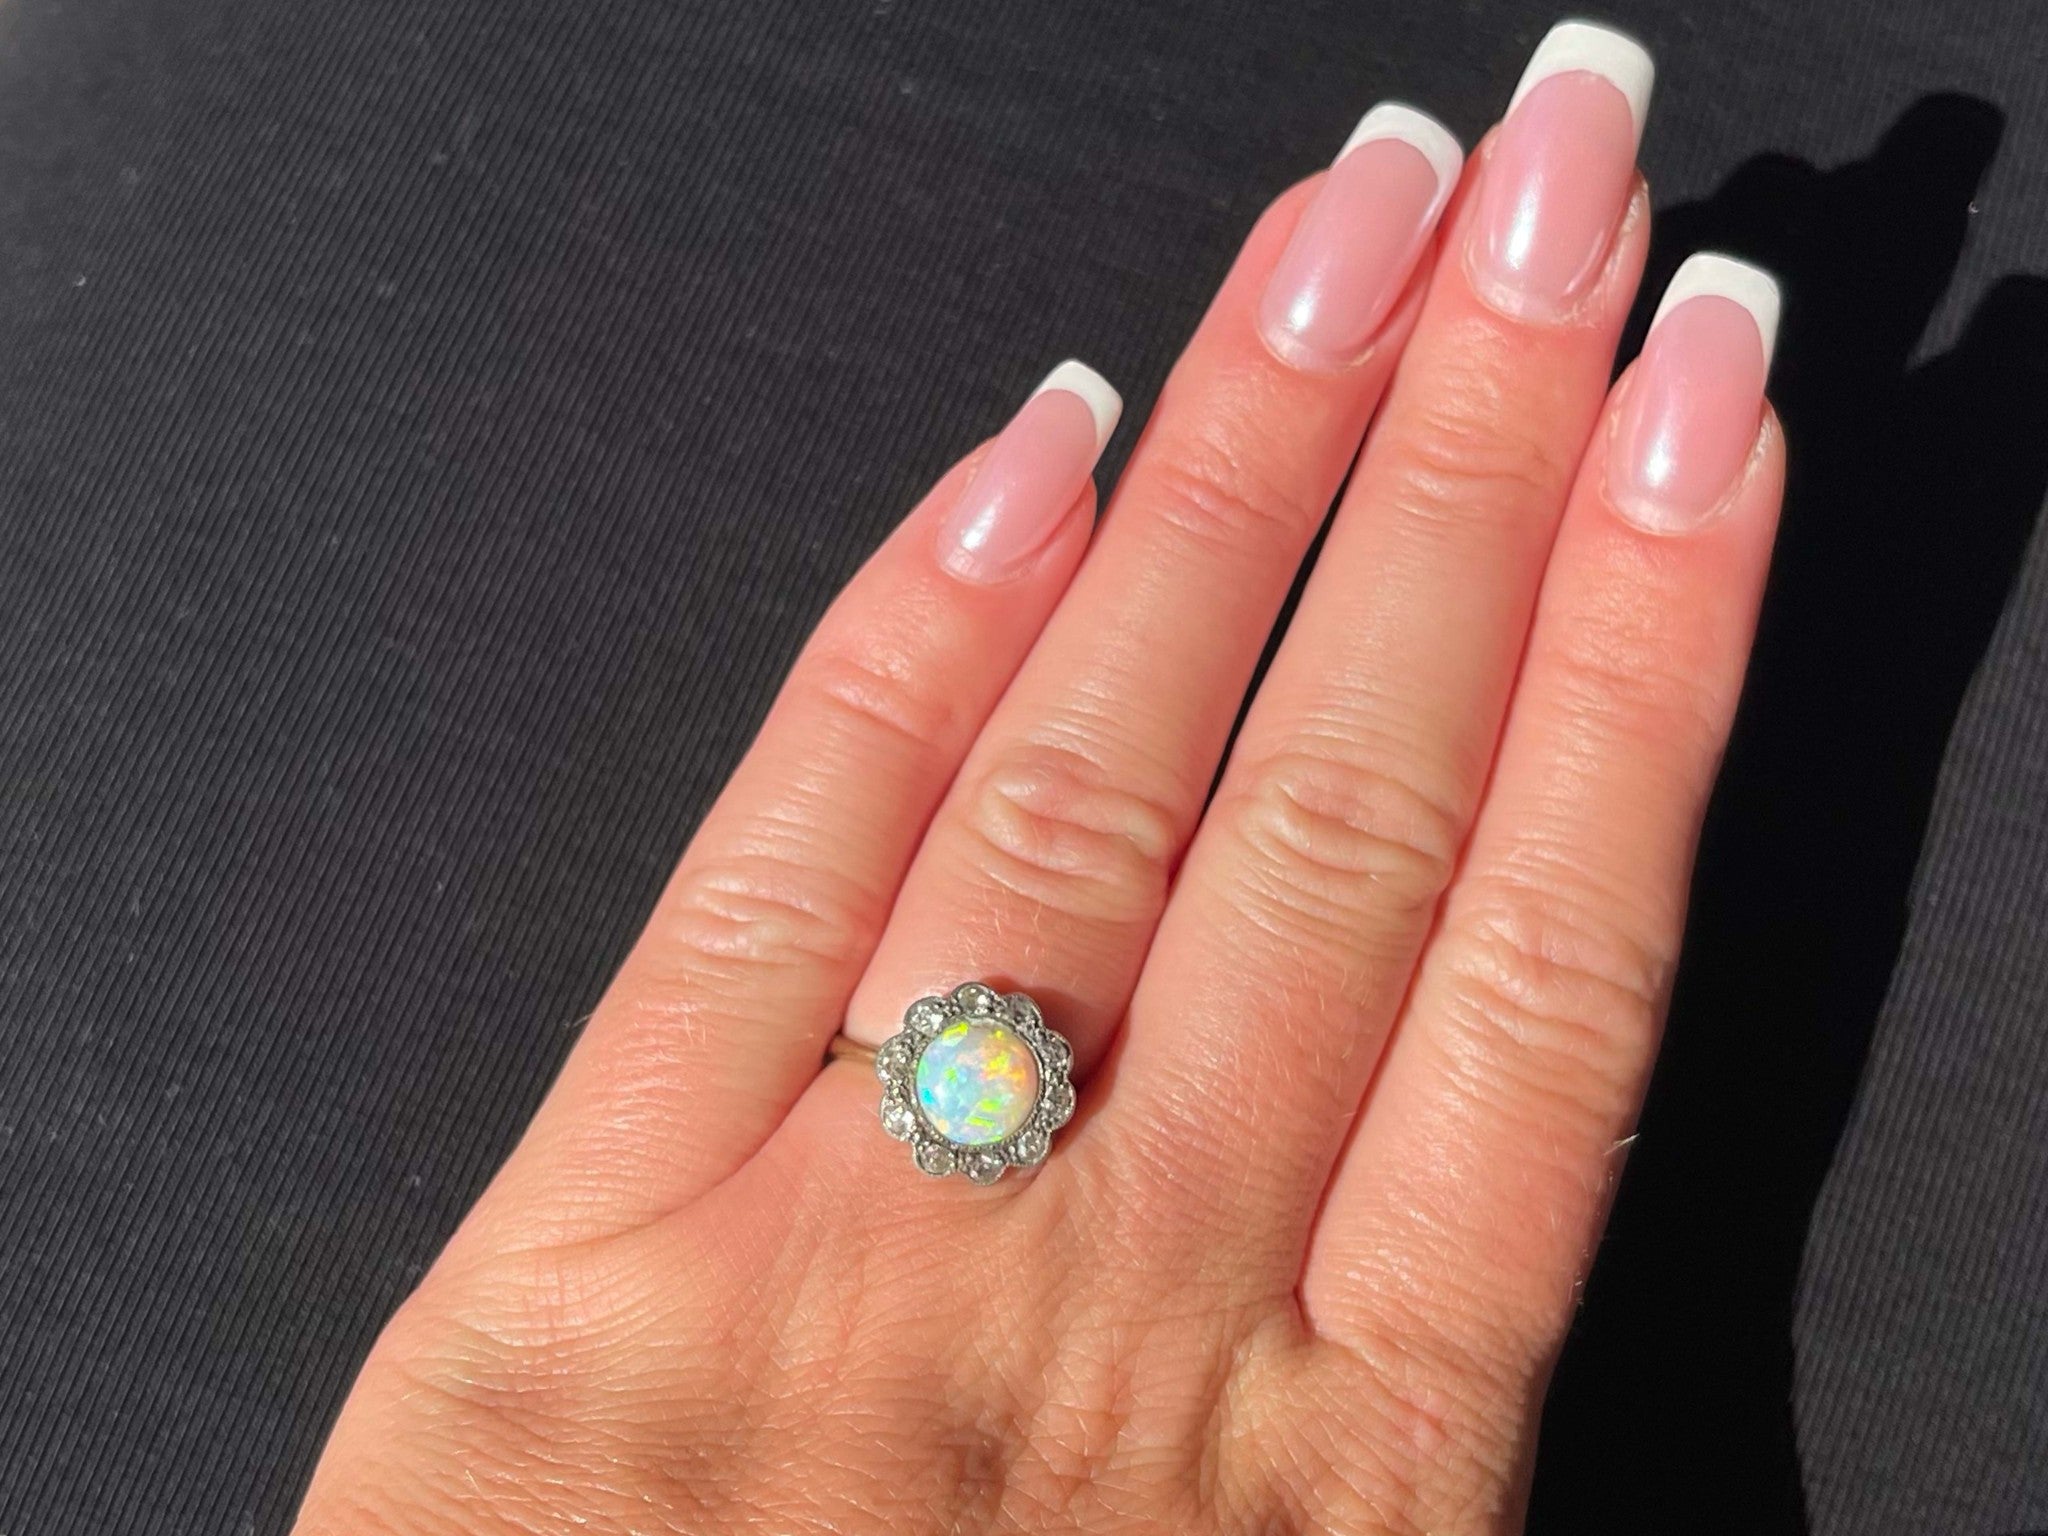 100 Year Old Antique Edwardian Era Opal and Diamond Flower Halo Ring